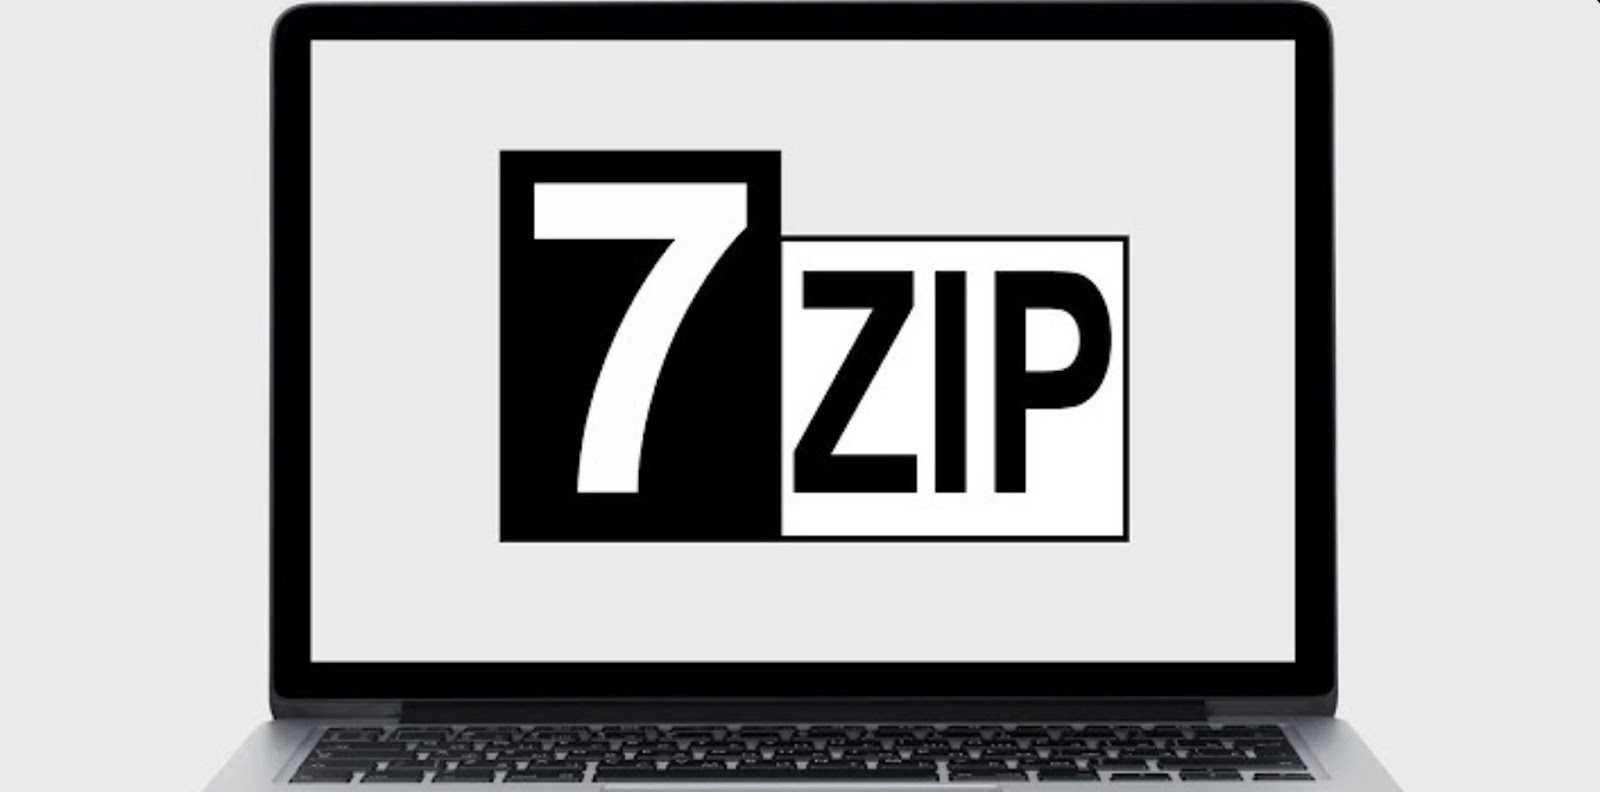 Laptop screen with inscription 7 zip